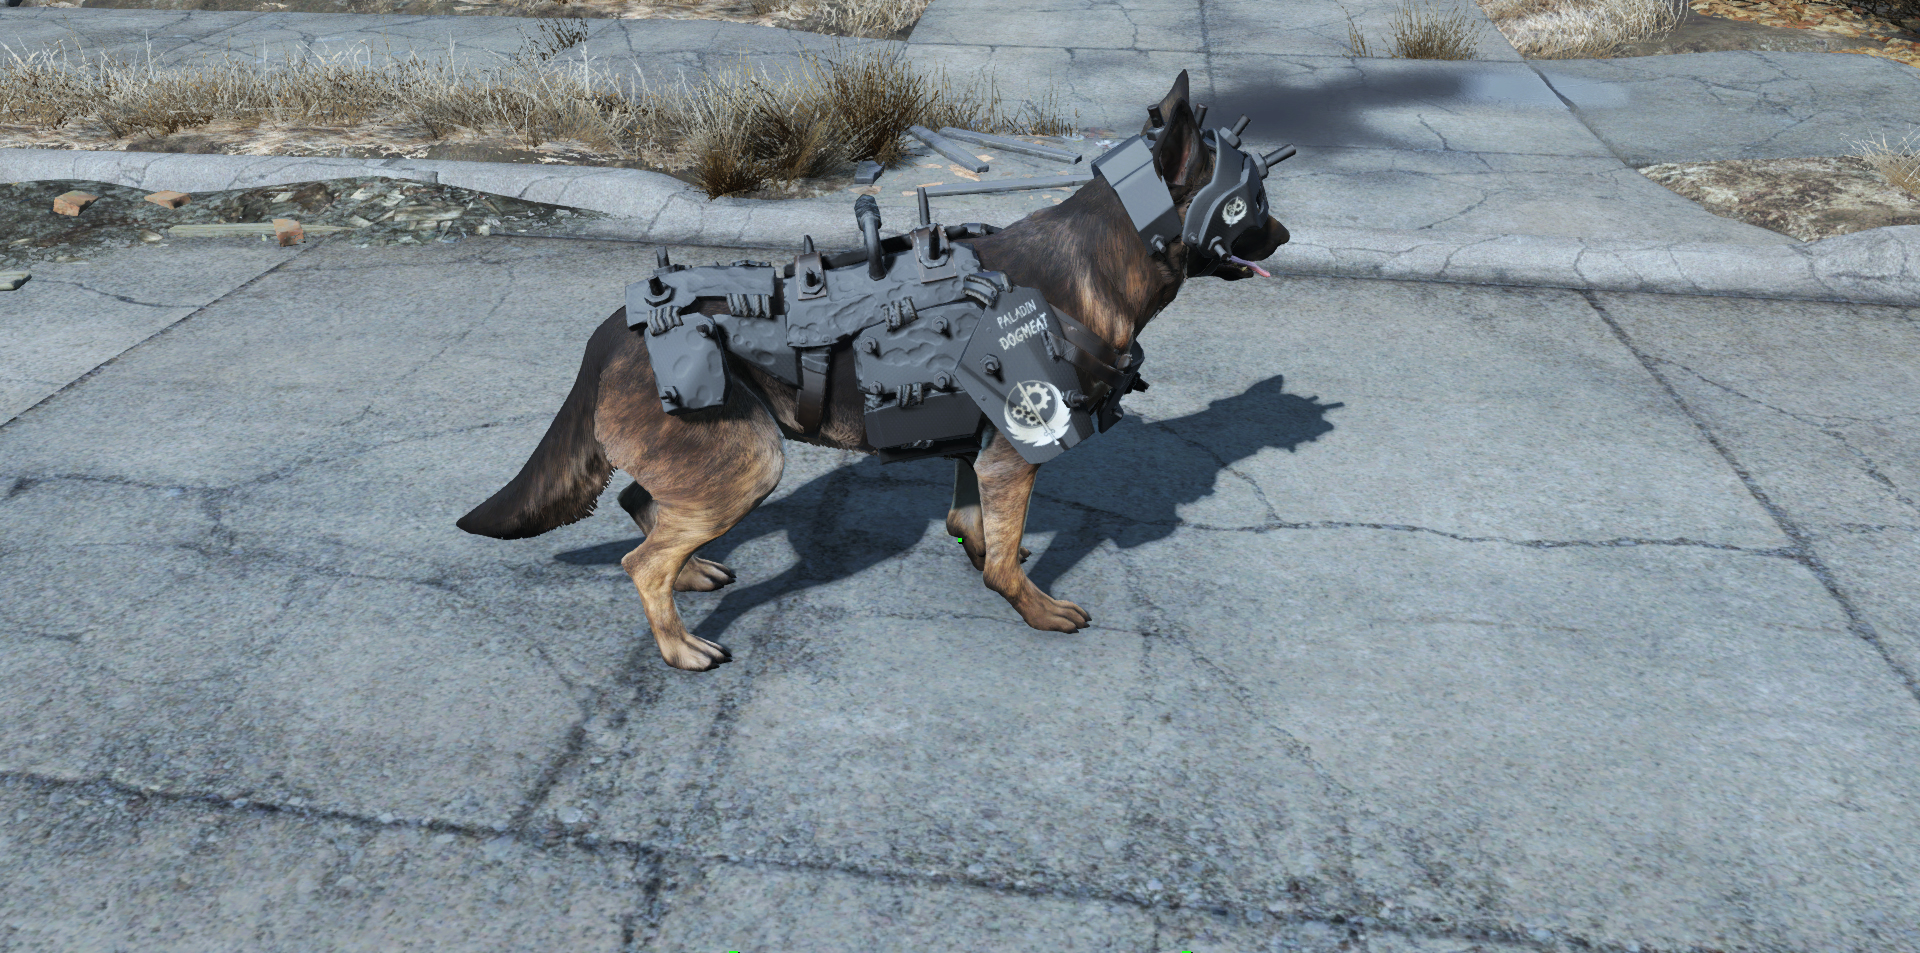 как одевать вещи на собаку в fallout 4 фото 51